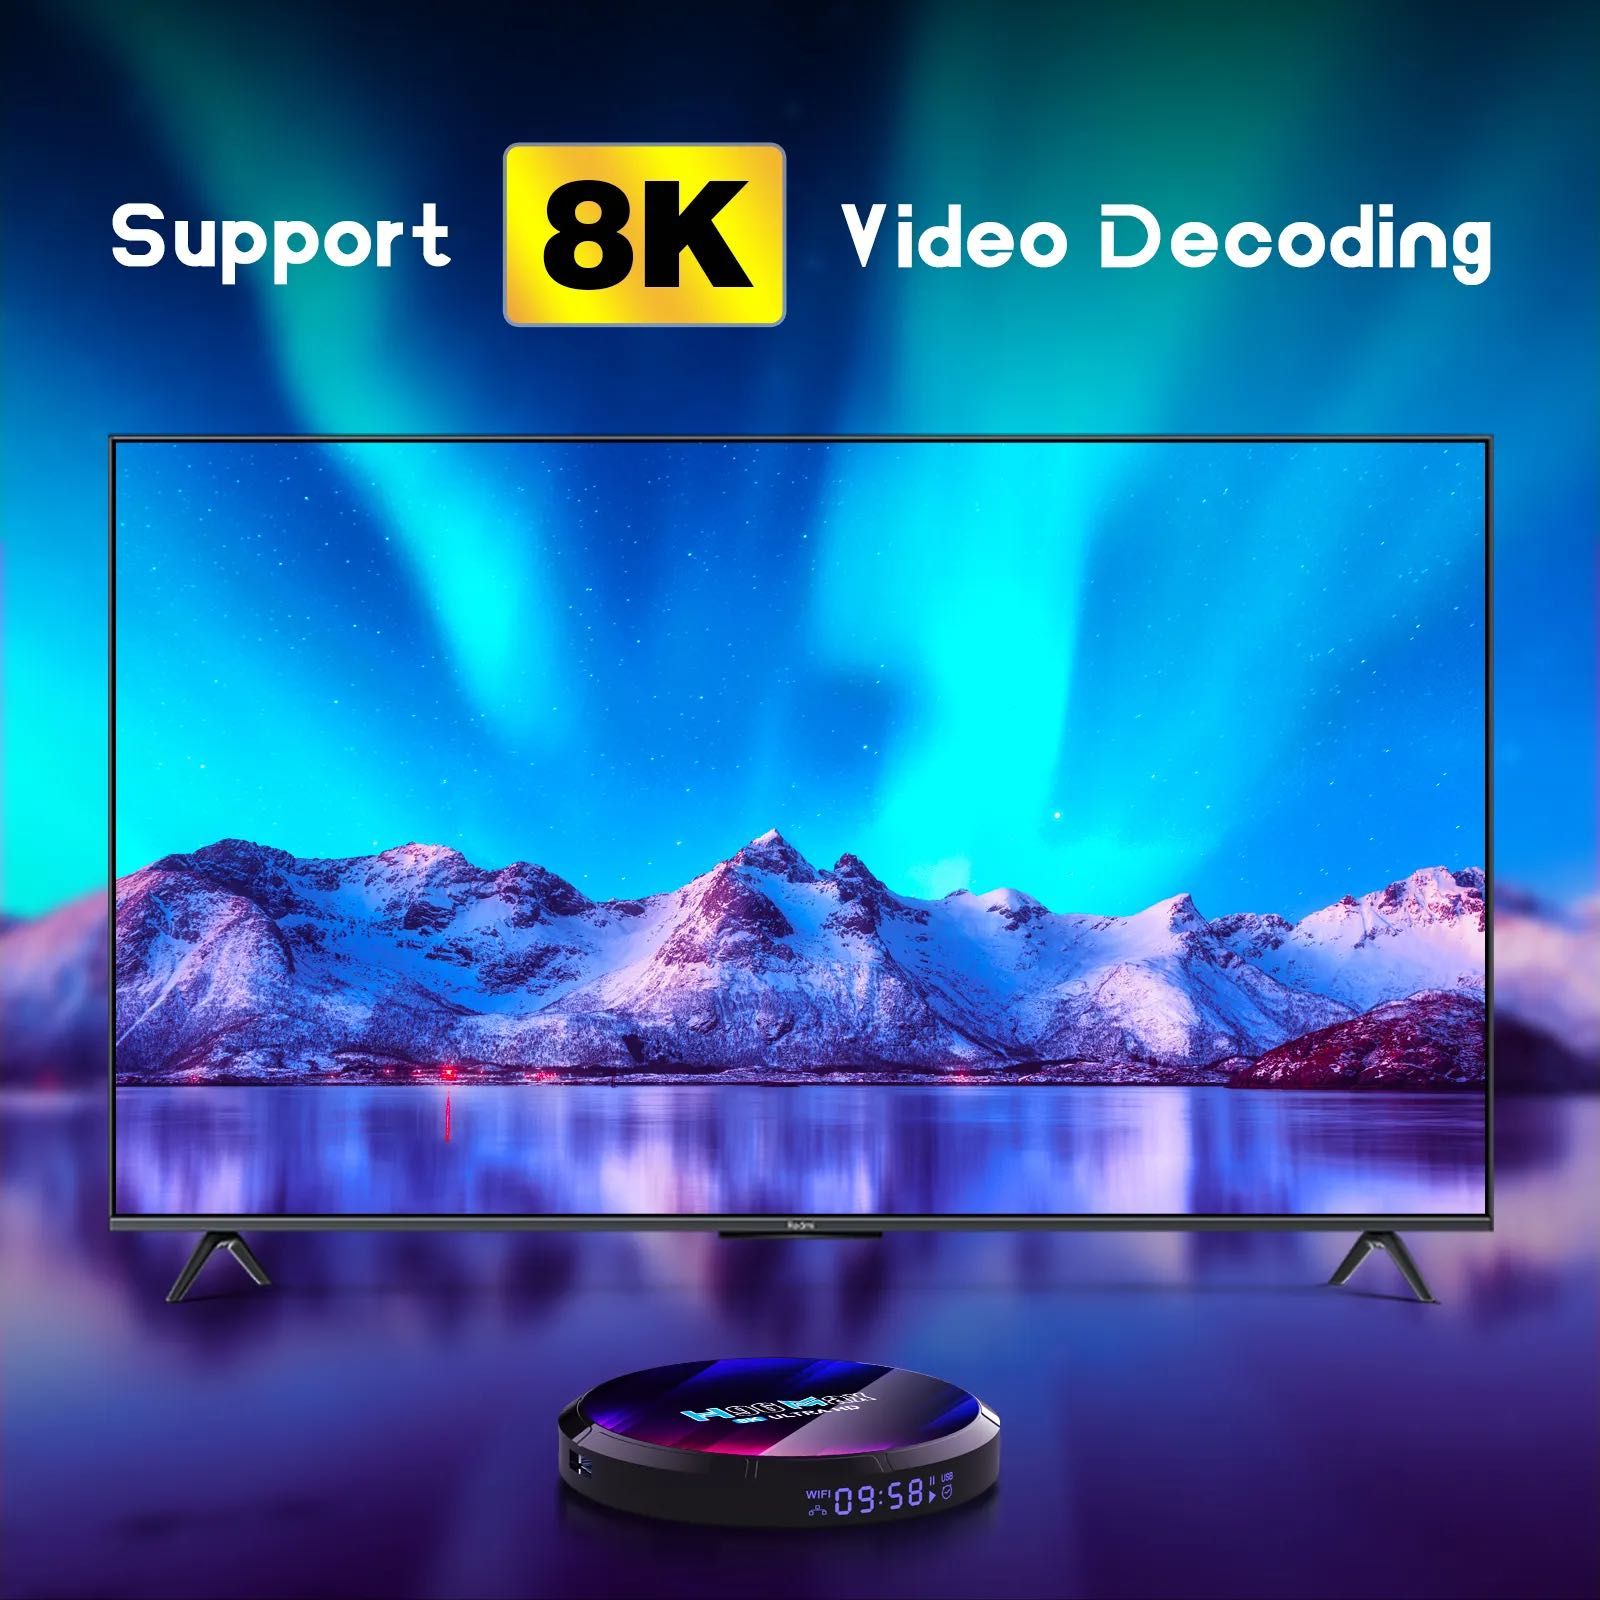 Медиа плеър ТВ бокс H96 Max  RK3528 4/64 Android 13 TV Box 8K Ultra HD